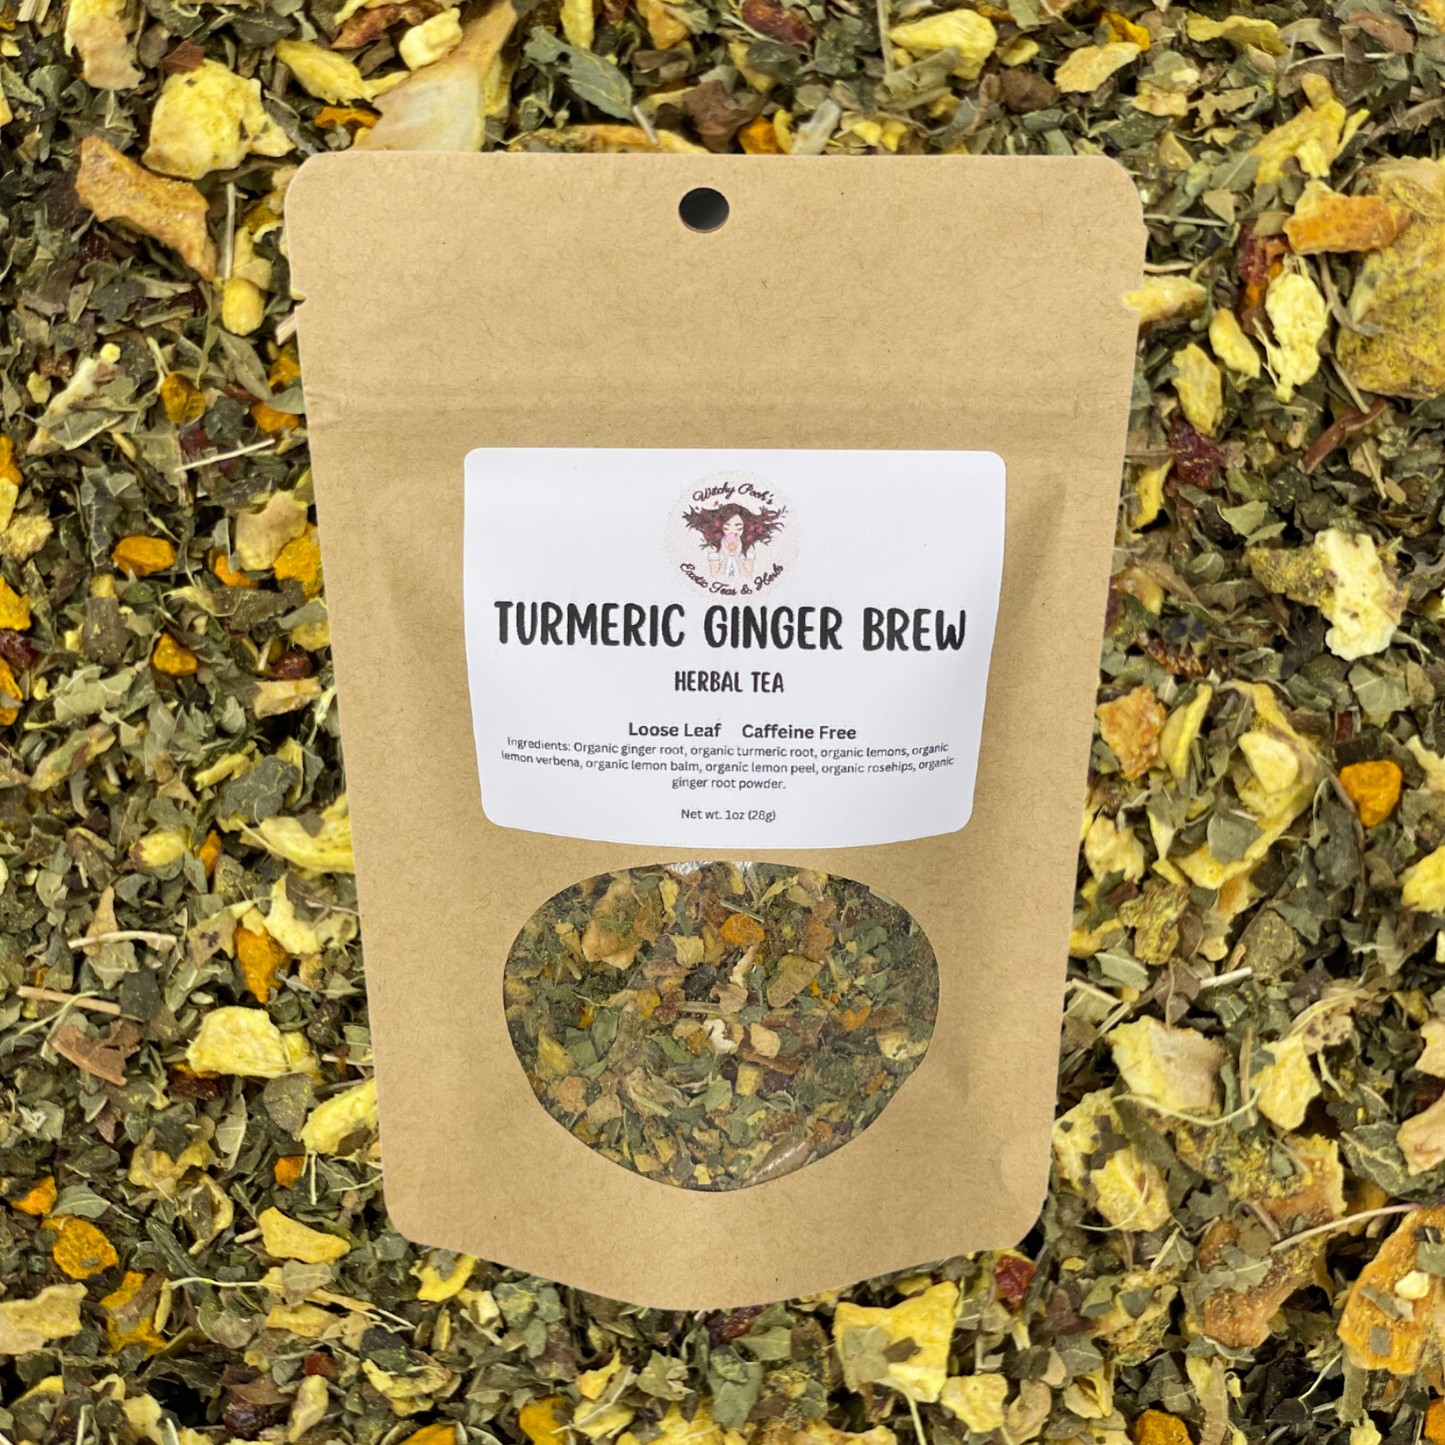 Turmeric Ginger Brew Loose Leaf Organic Functional Herbal Tea, Caffeine Free